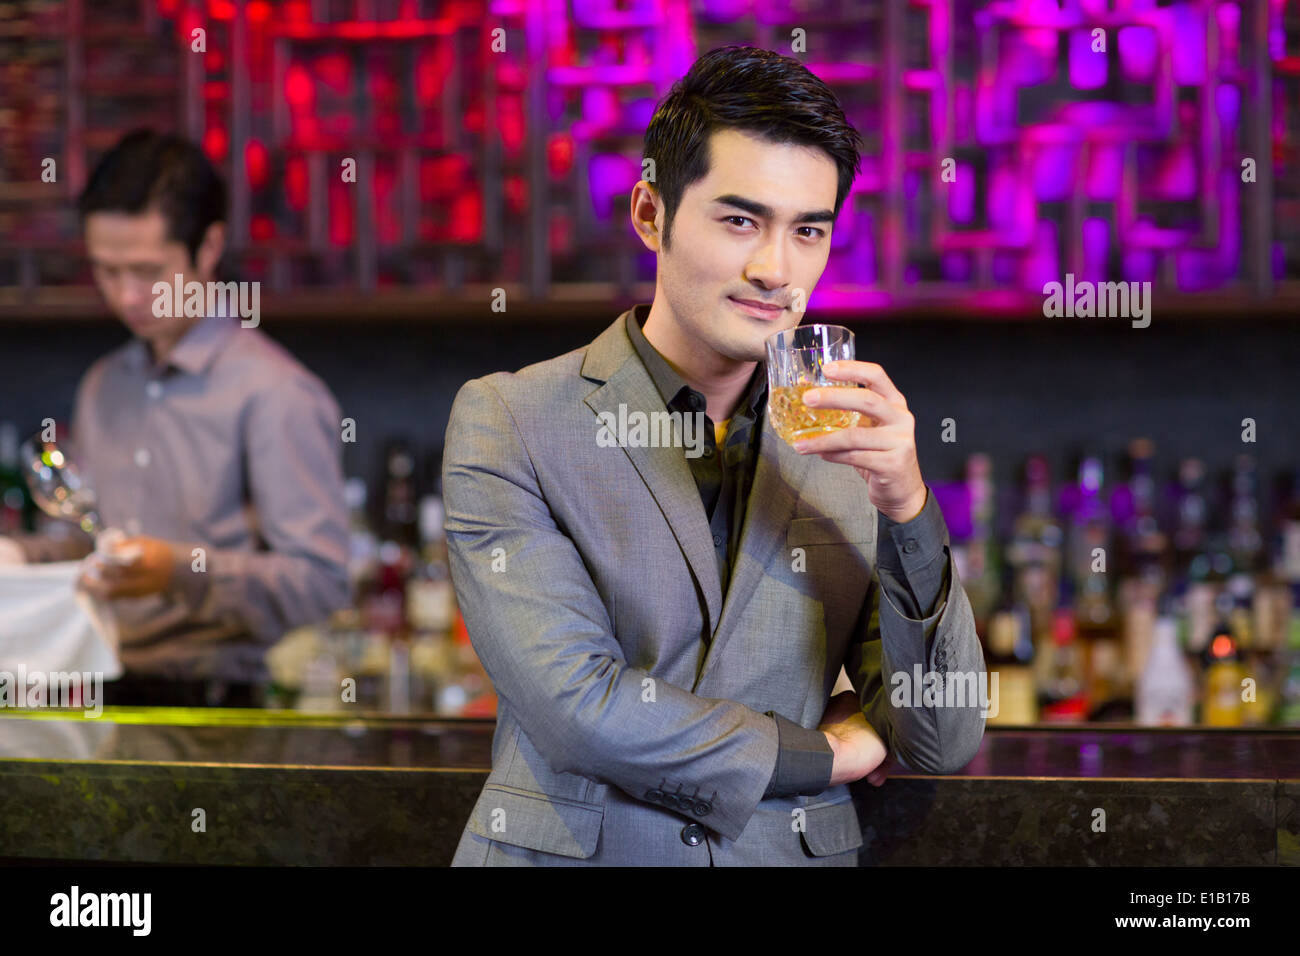 Young man having a drink at bar Stock Photo